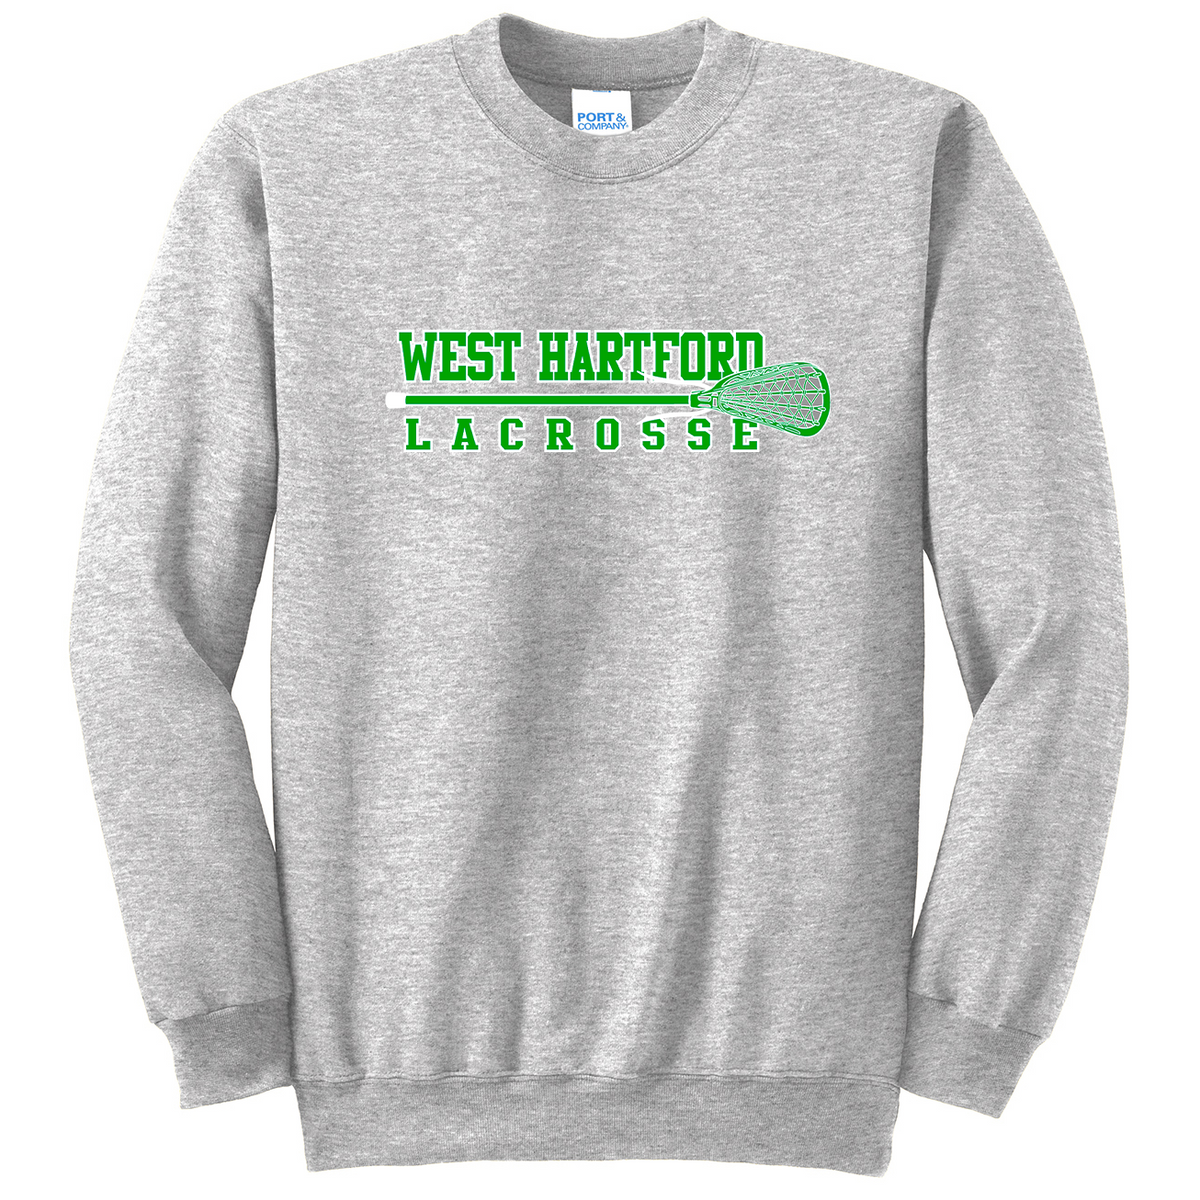 West Hartford Lacrosse Crew Neck Sweater